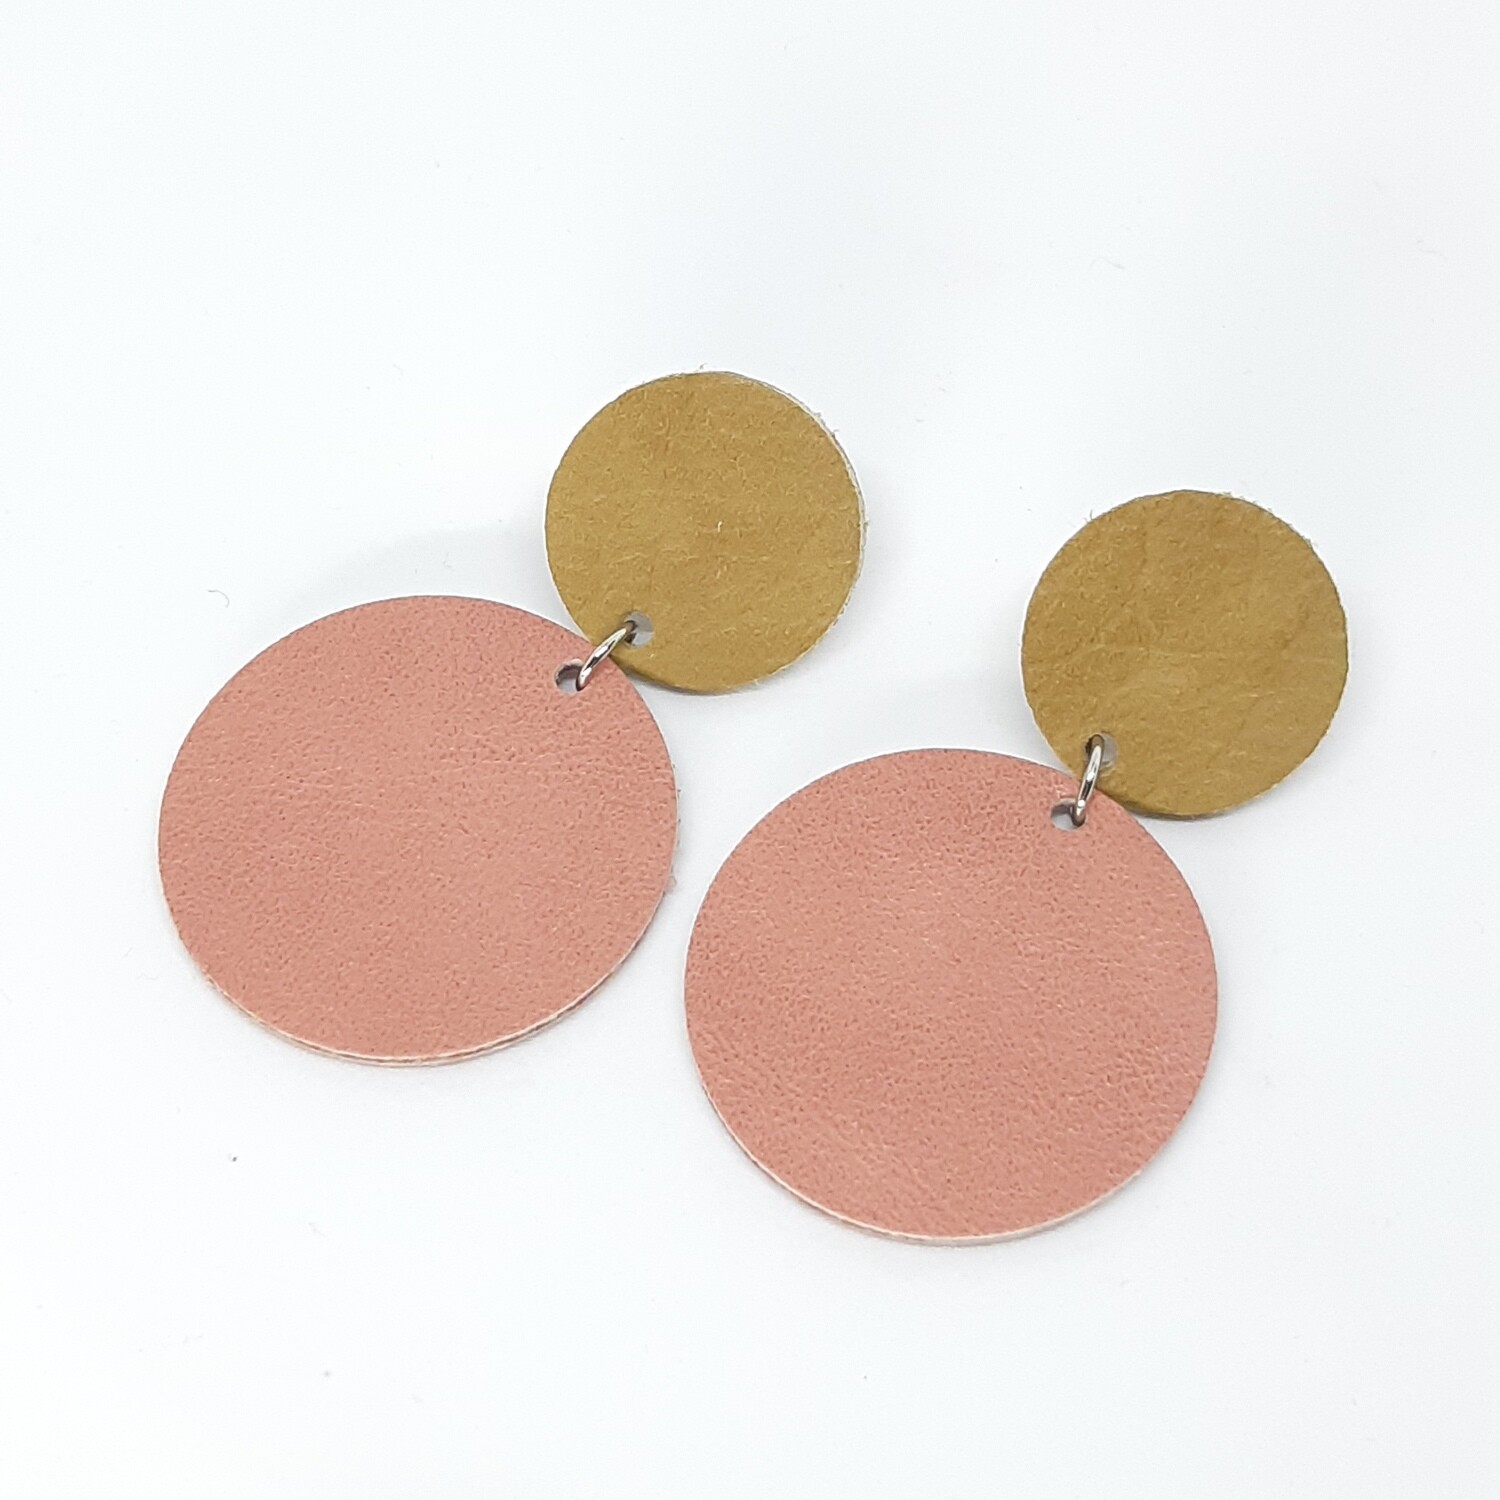 Statement oorbellen duo color - oker & oud roze leder - L: 6cm